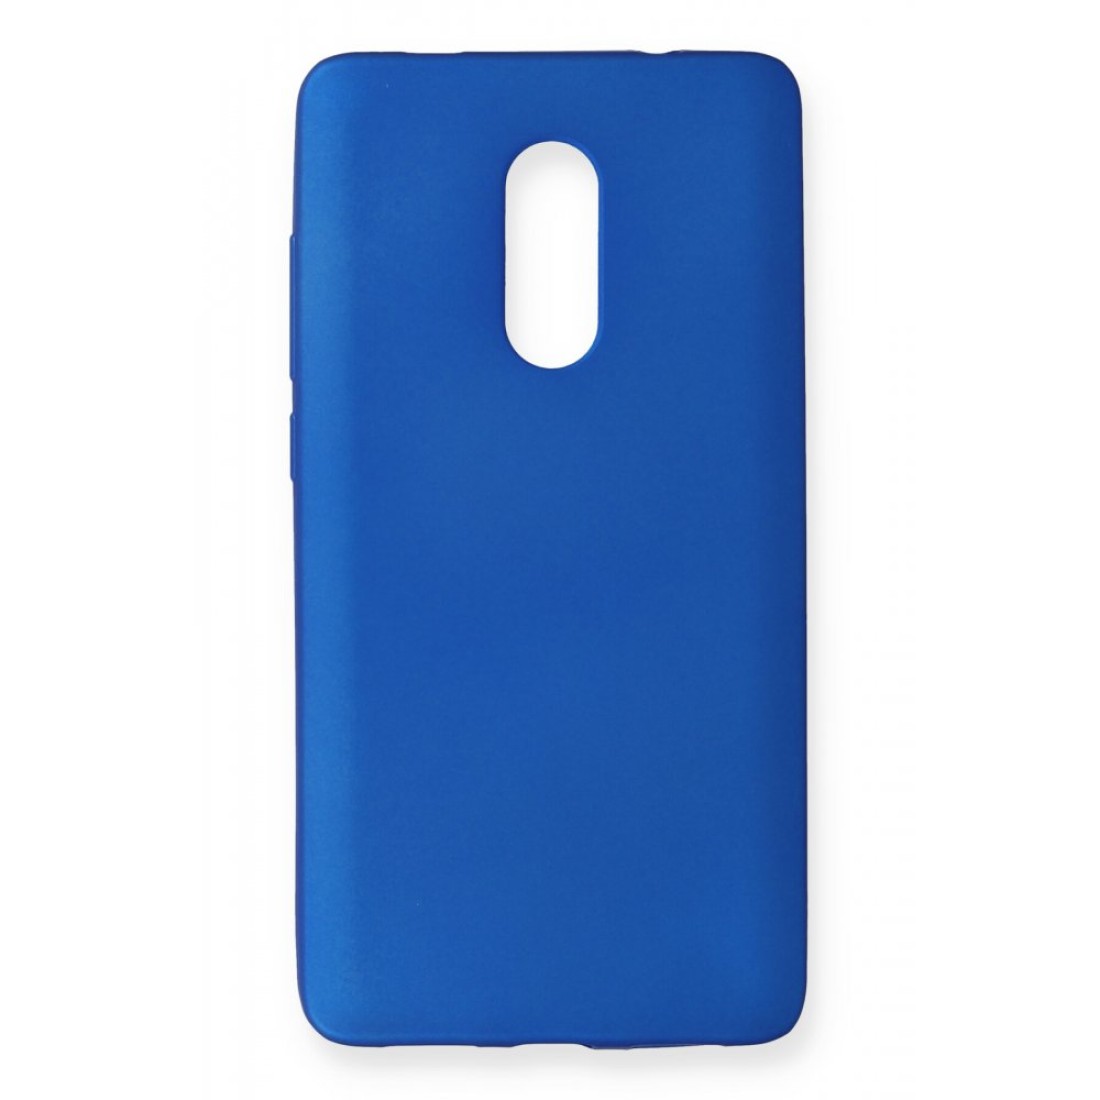 Xiaomi Redmi Note 4X Kılıf Premium Rubber Silikon - Mavi